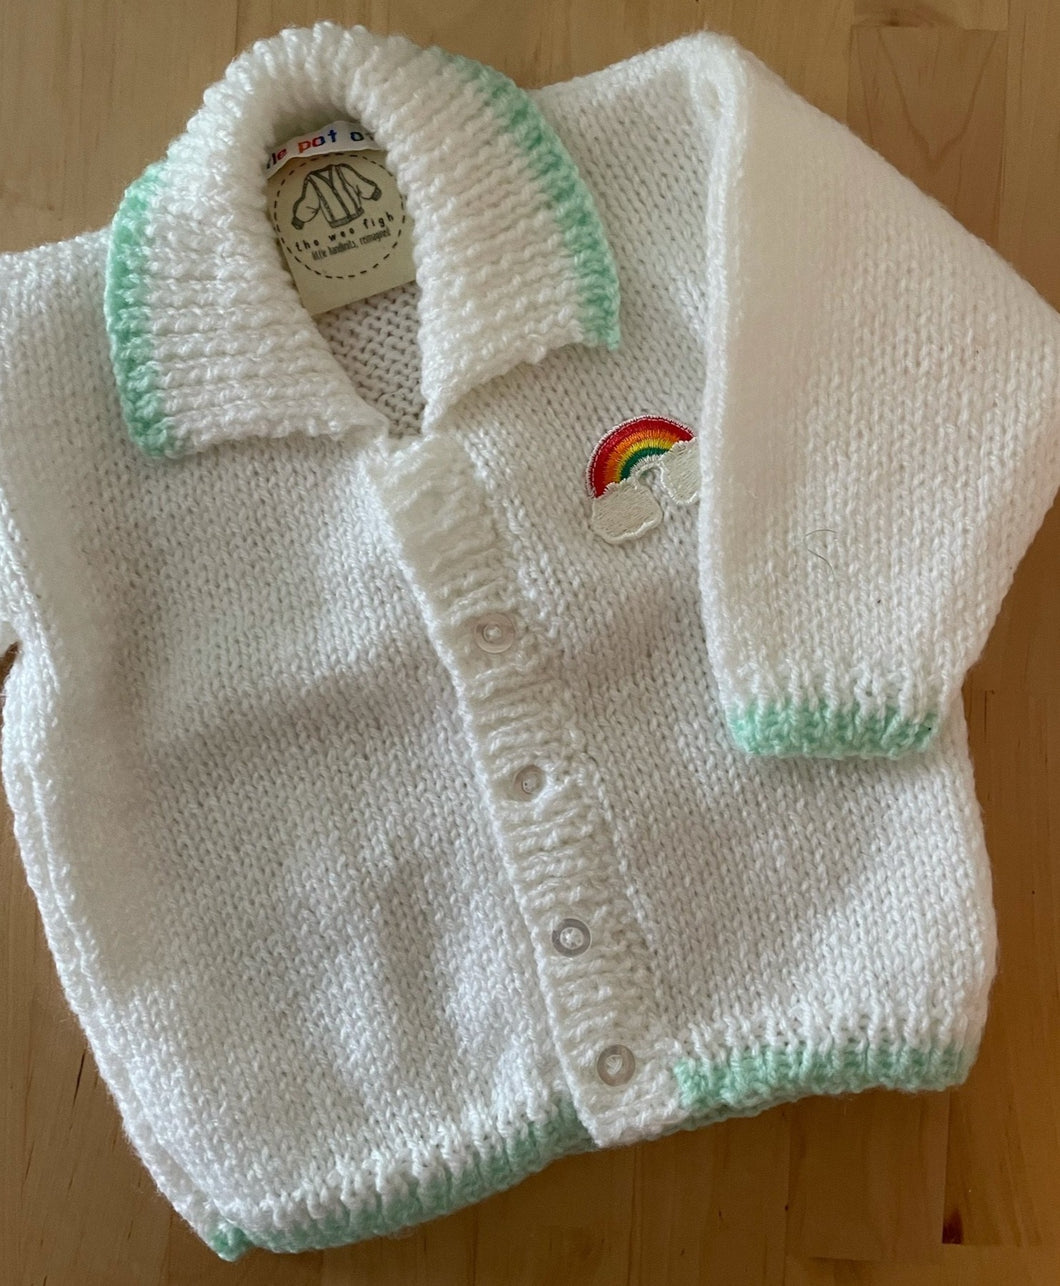 0-3 months - White rainbow cardigan with green trim